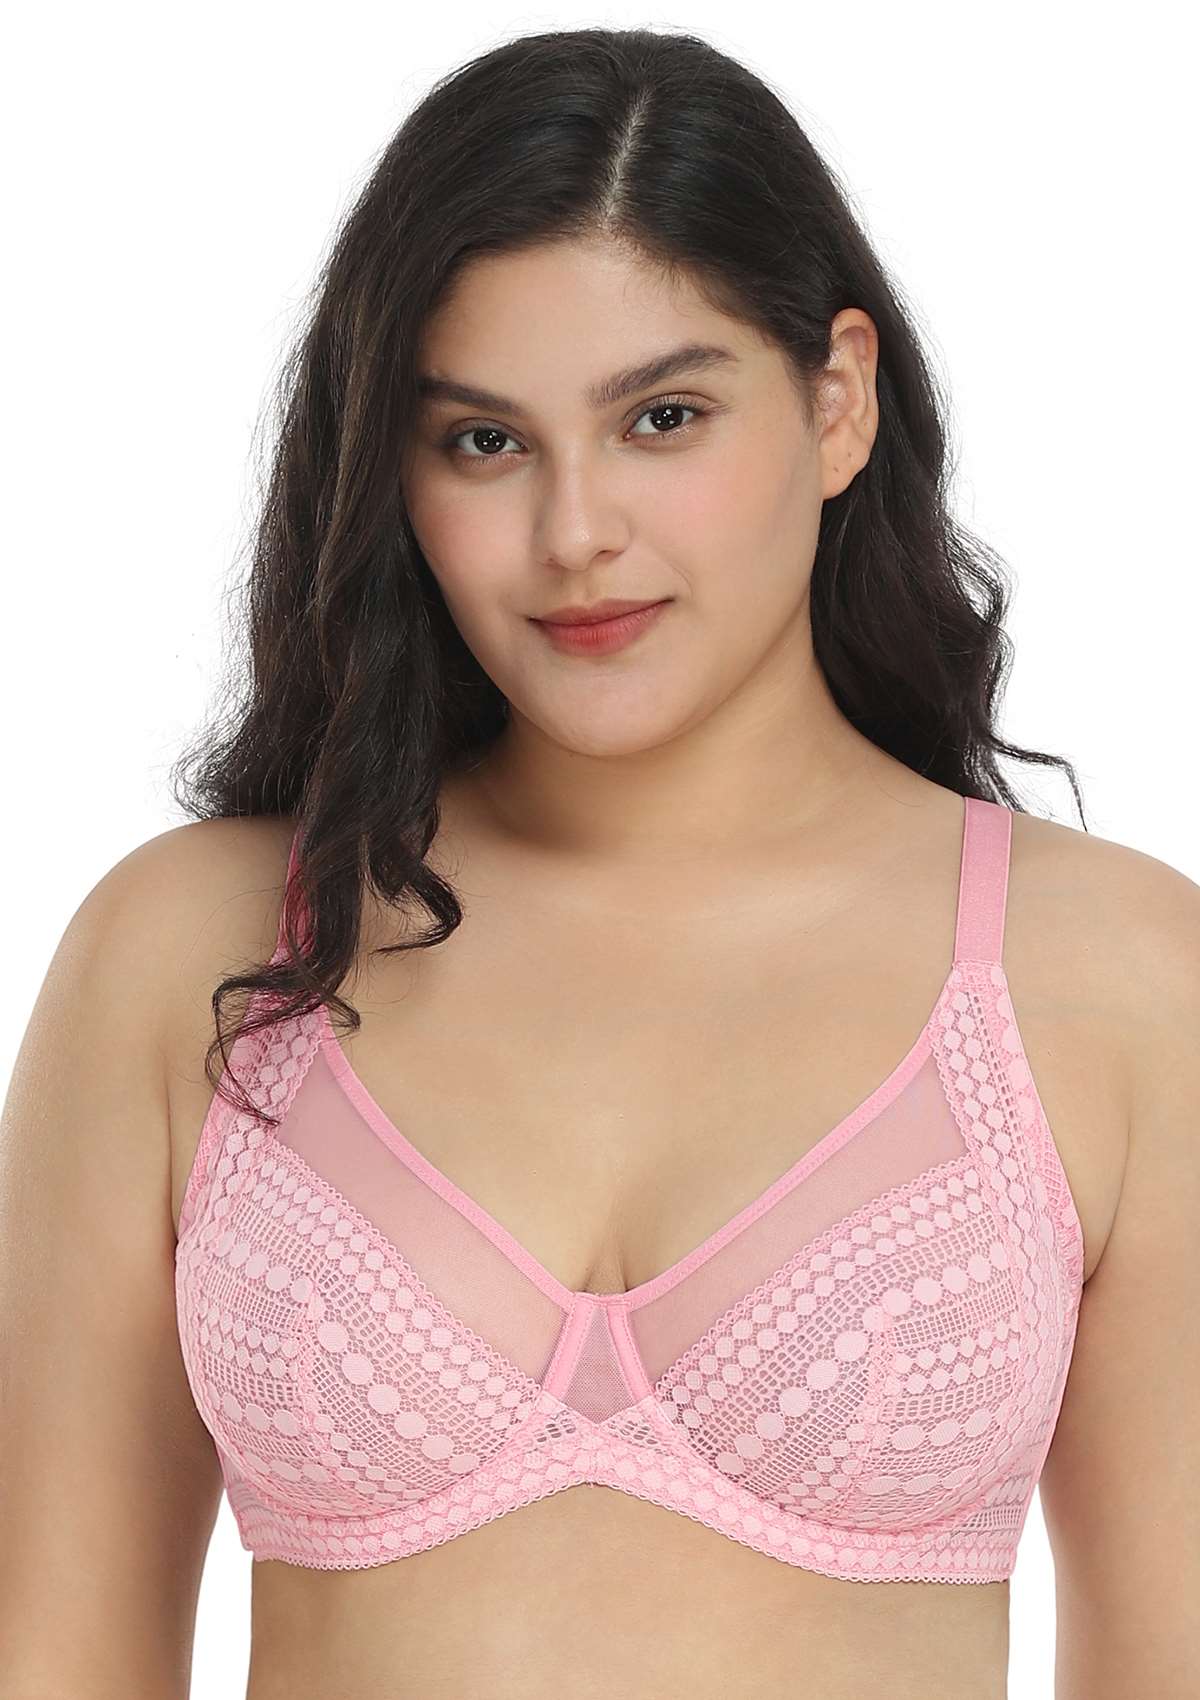 HSIA Heroine Lace Unlined Bra: Bra That Hides Back Fat - Plus Size - Pink / 44 / D